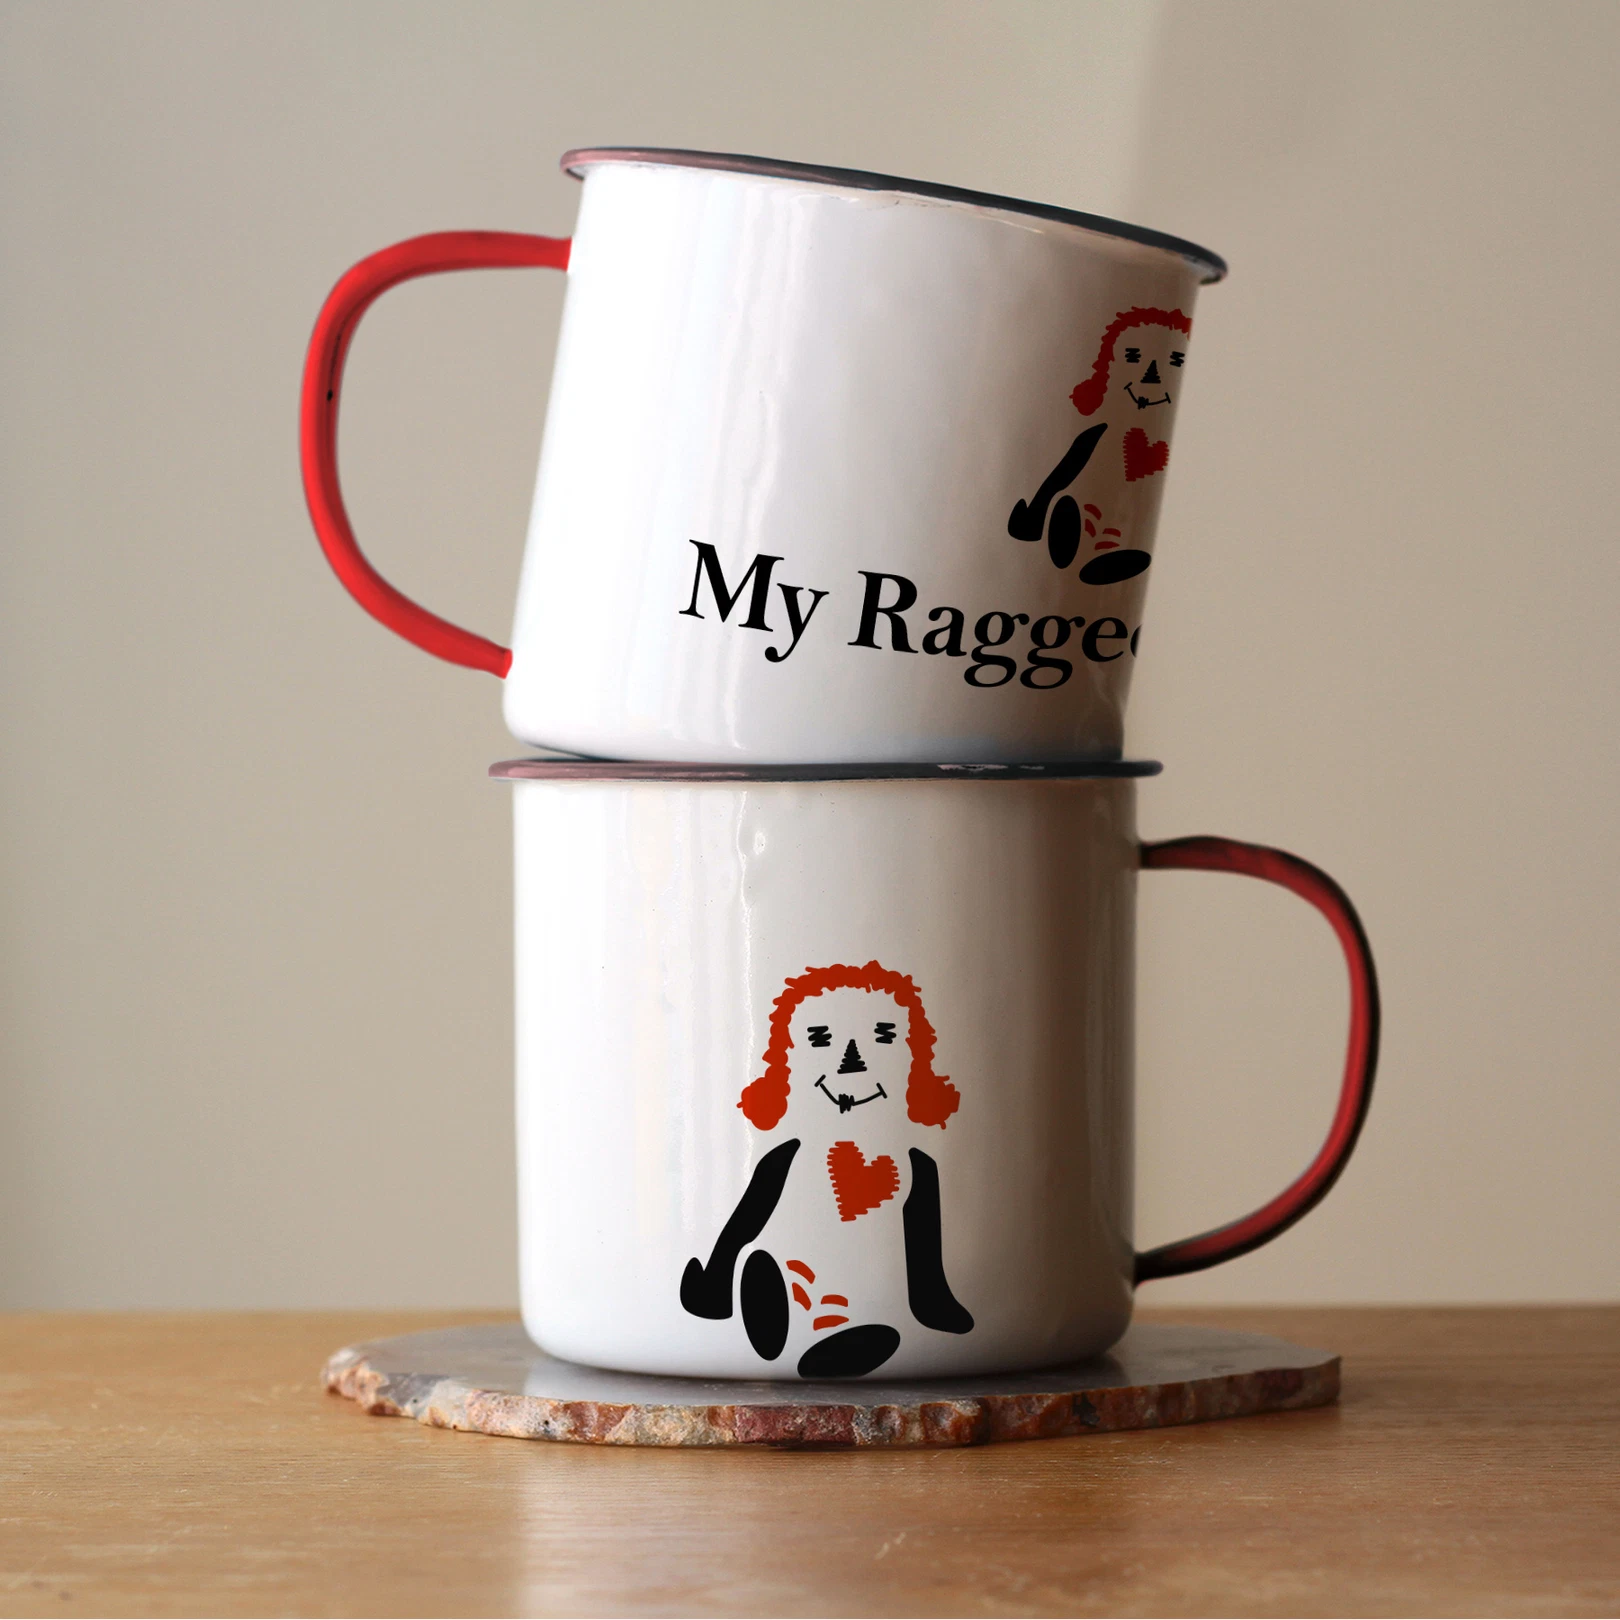 The logo of My Raggedy Herbs on a homemade mug.